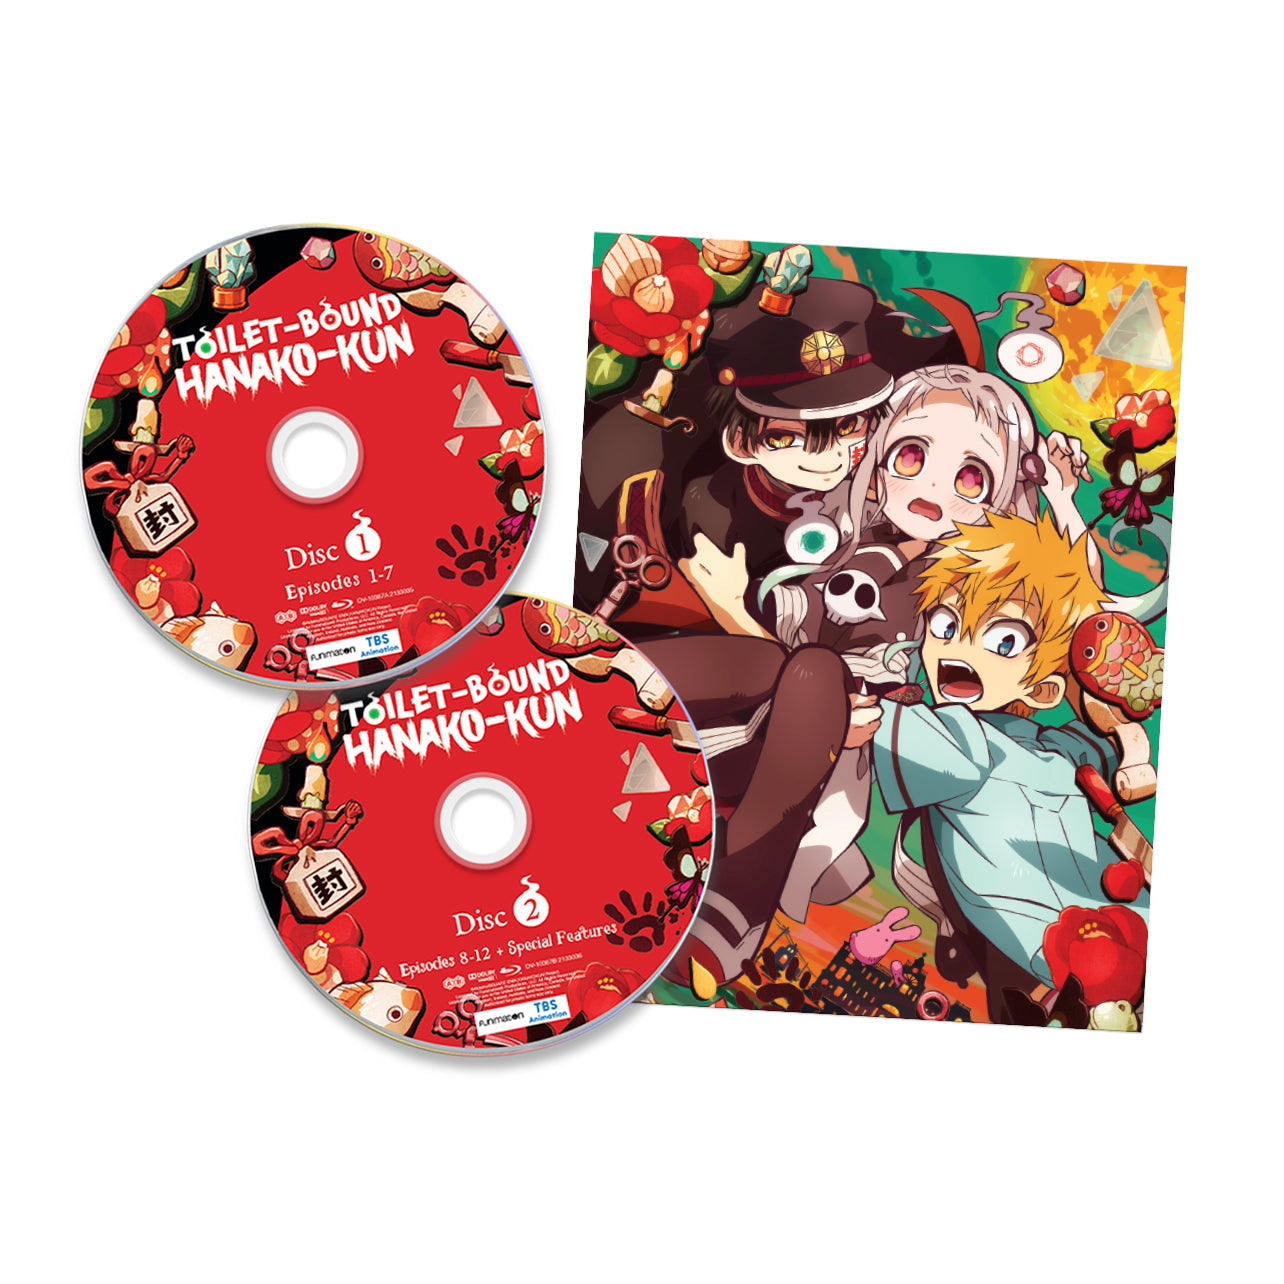 Toilet-bound Hanako-kun - The Complete Series - Blu-ray image count 4